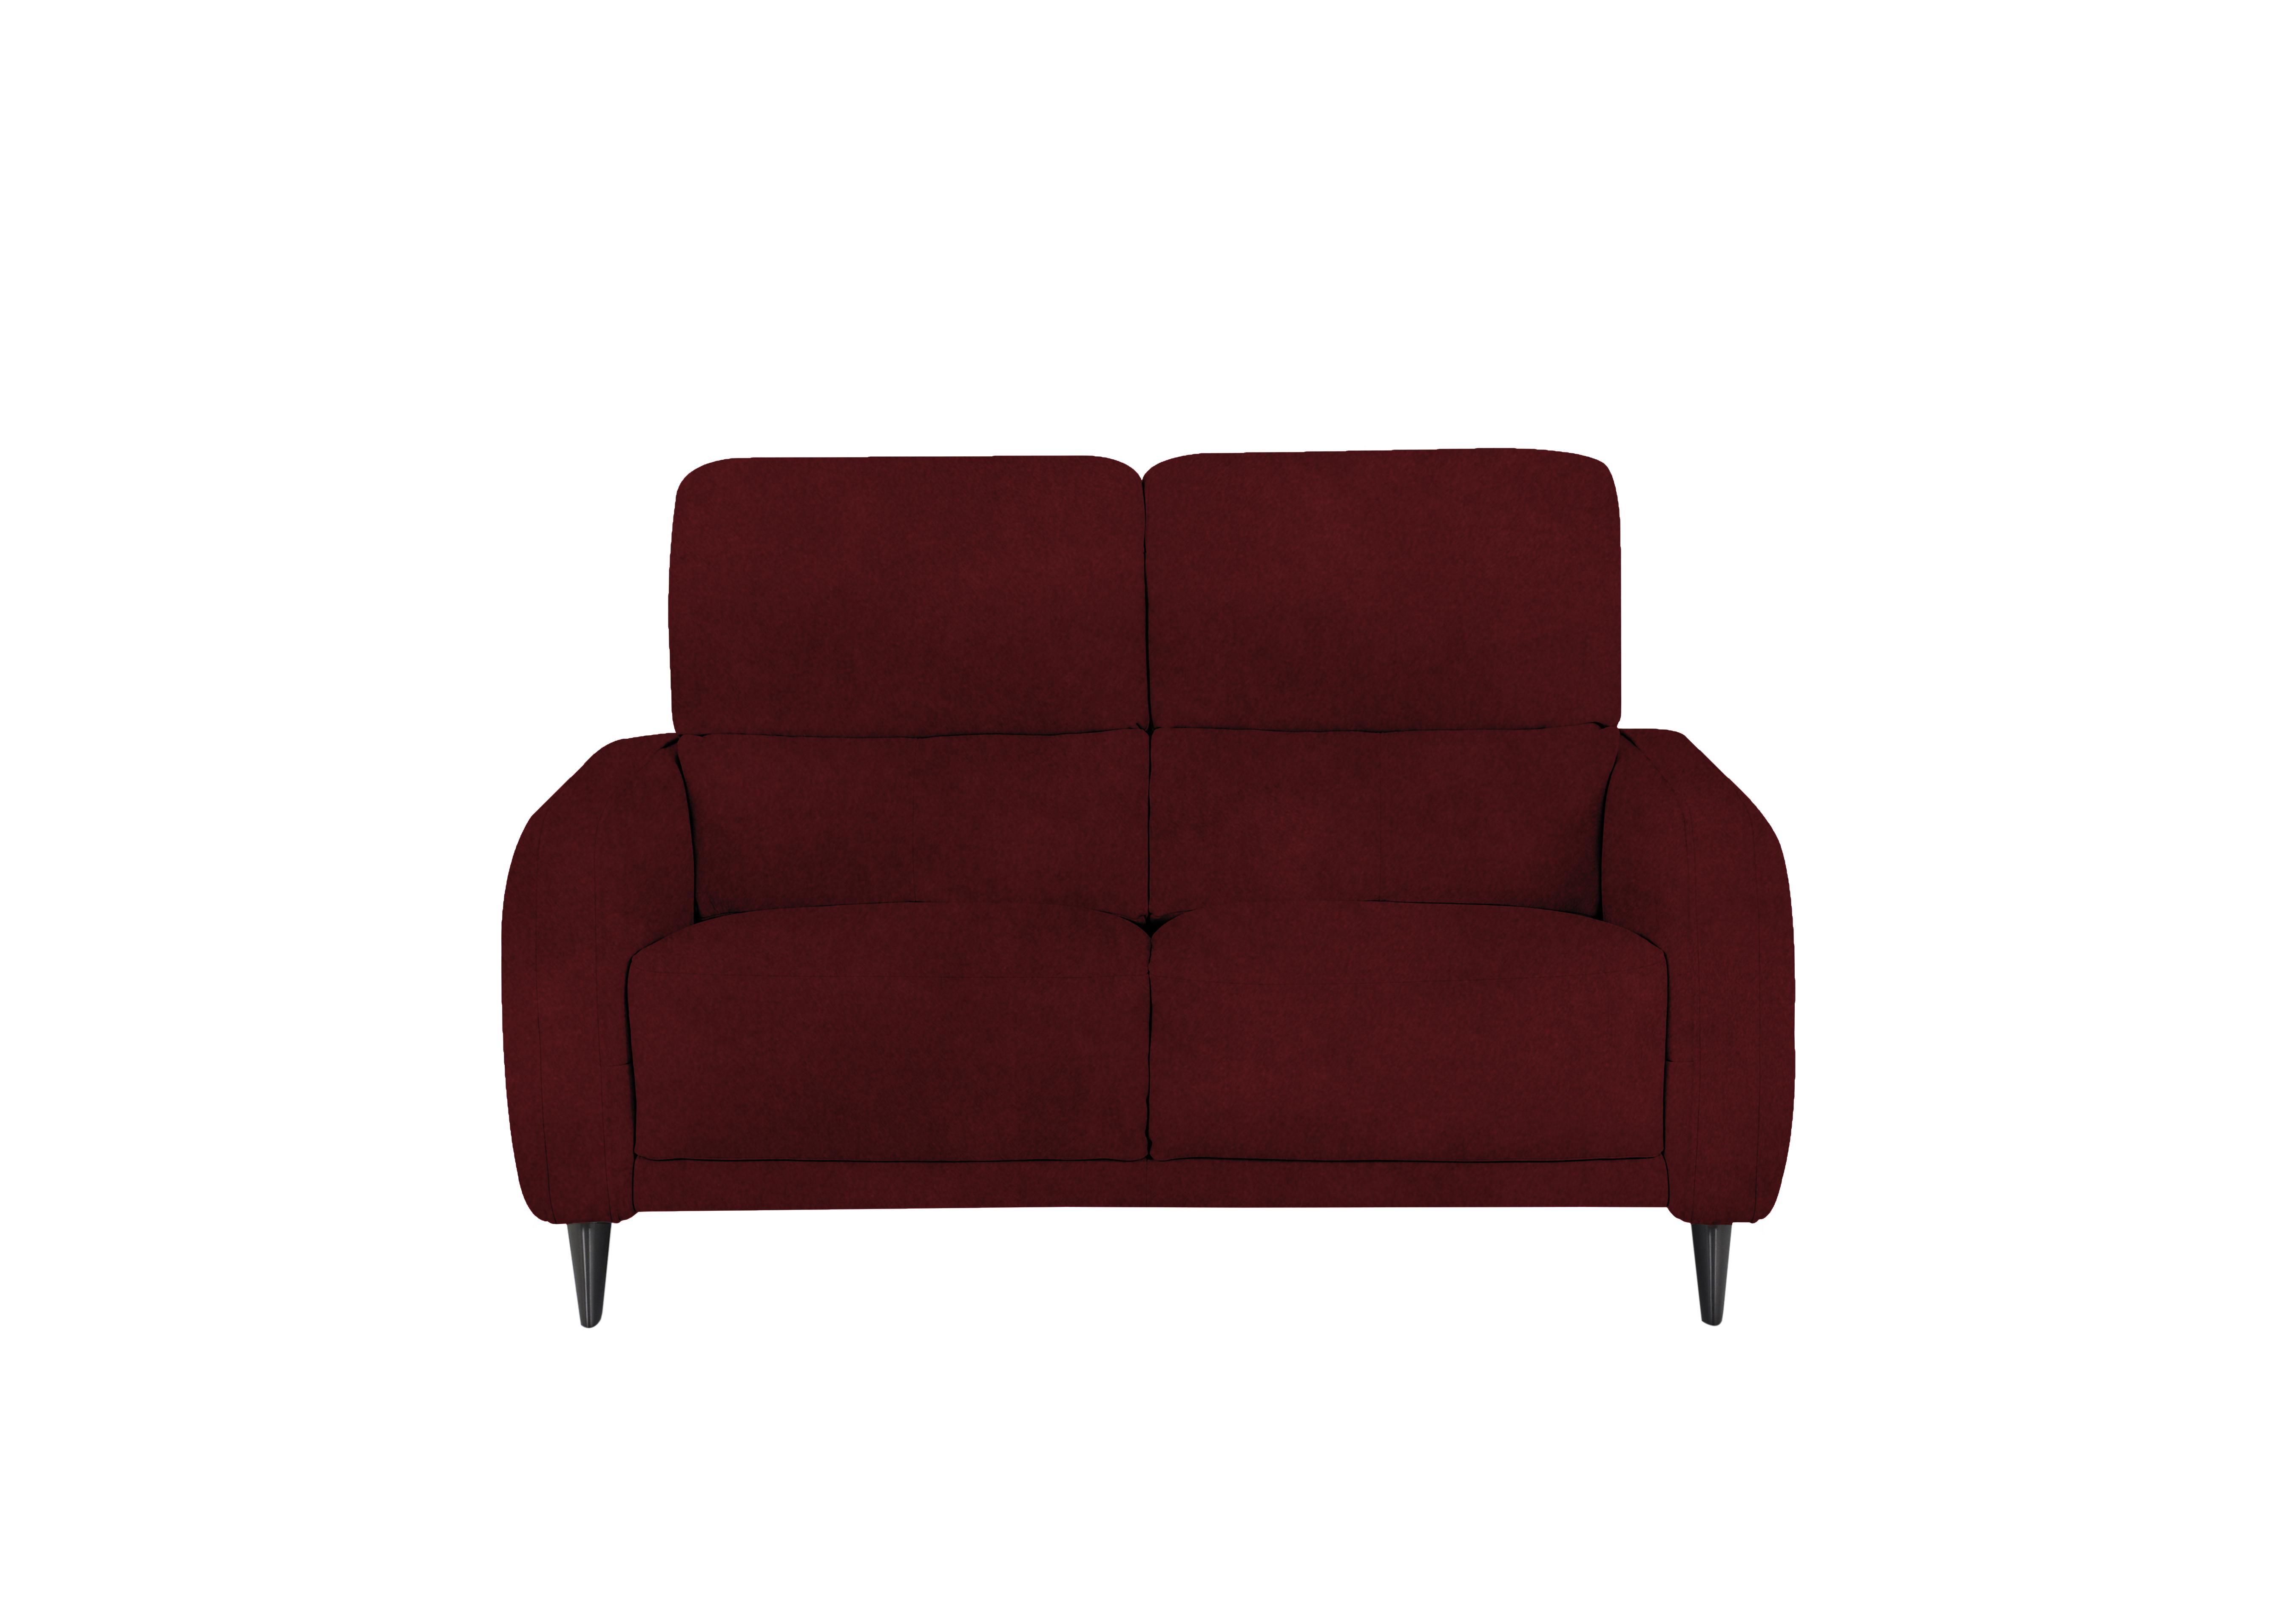 Logan 2 Seater Fabric Sofa in Fab-Meg-R65 Burgundy on Furniture Village